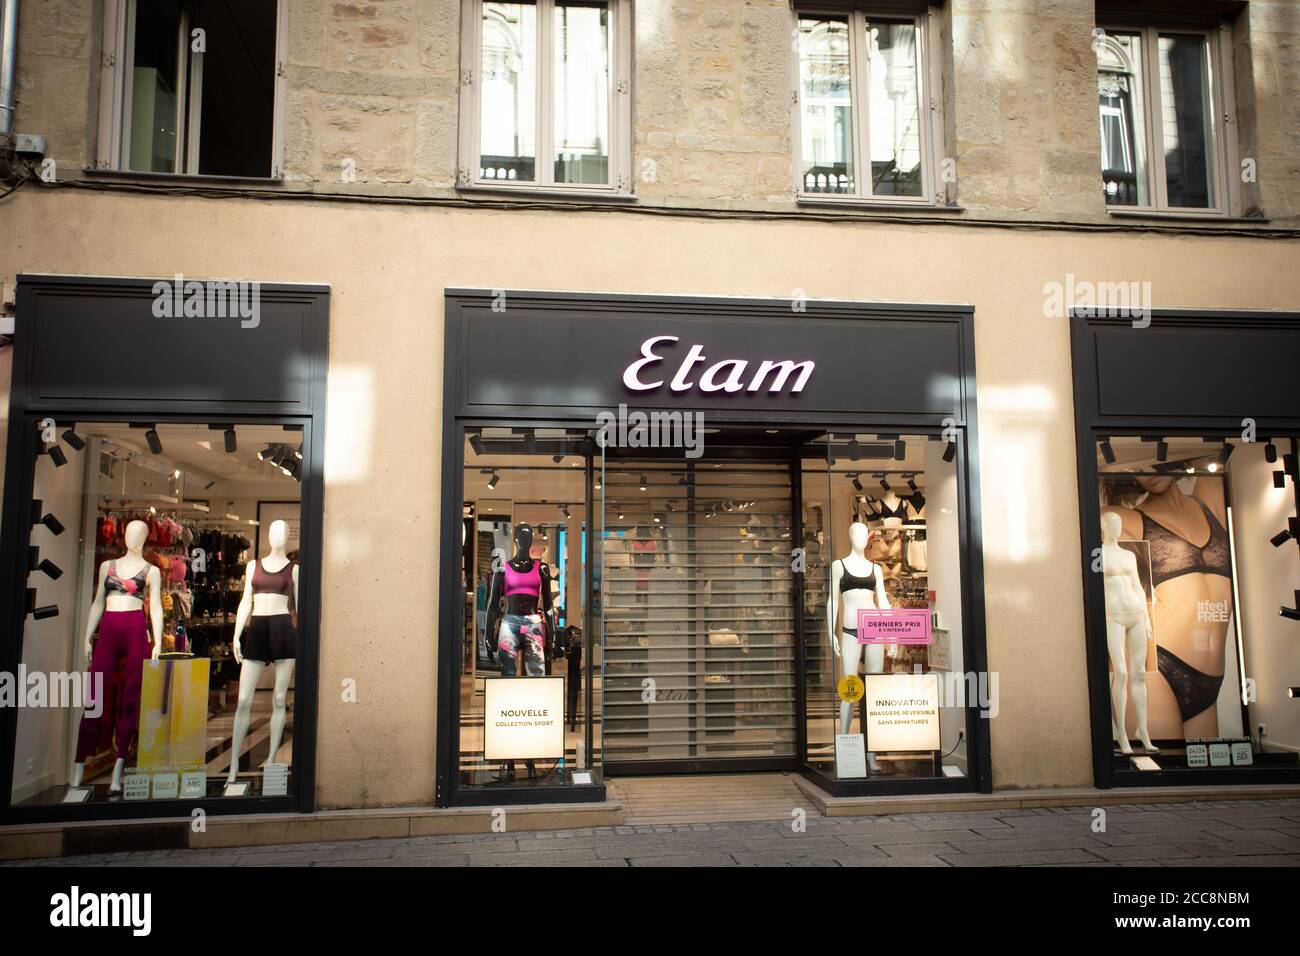 Etam brand women's clothing storefront Stock Photo - Alamy